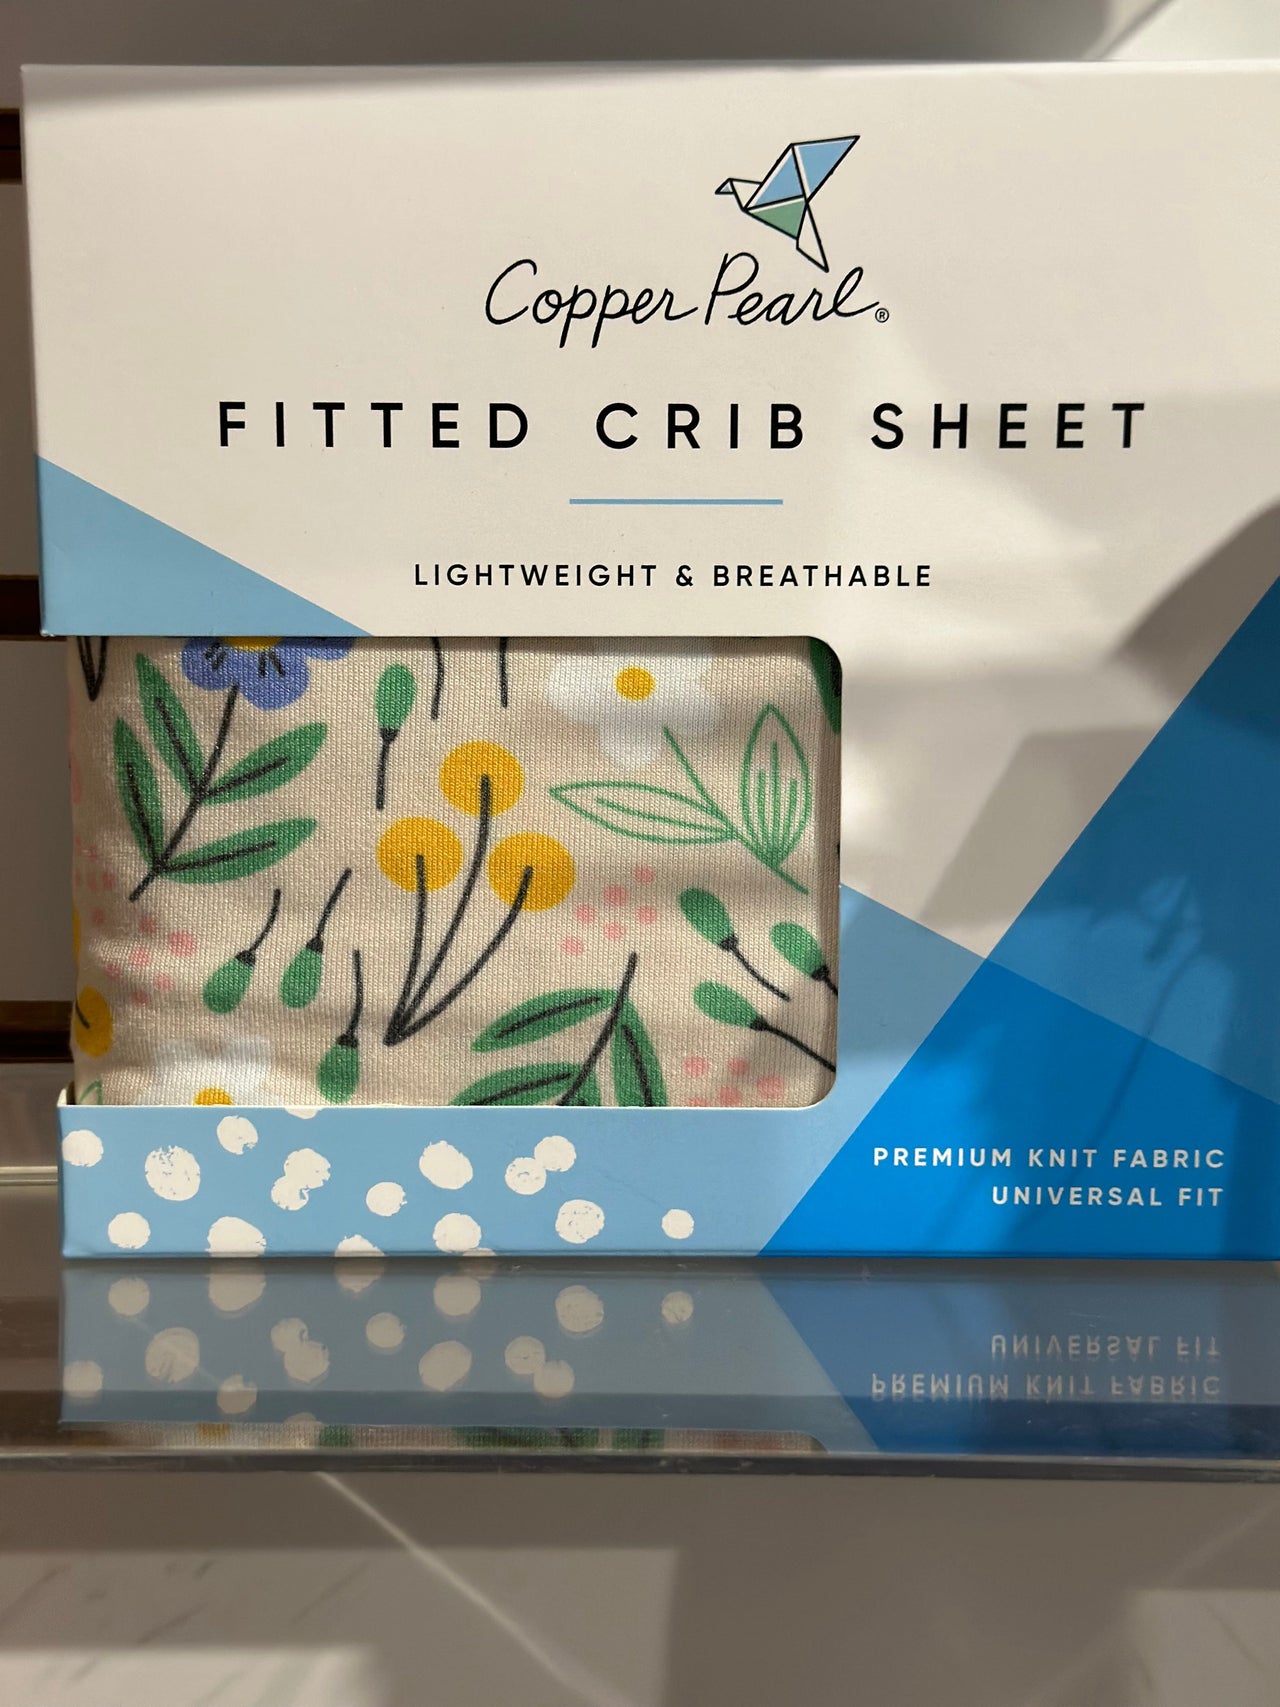 Copper Pearl Fitted Crib Sheet Carolina Baby aco crib sheet Clara